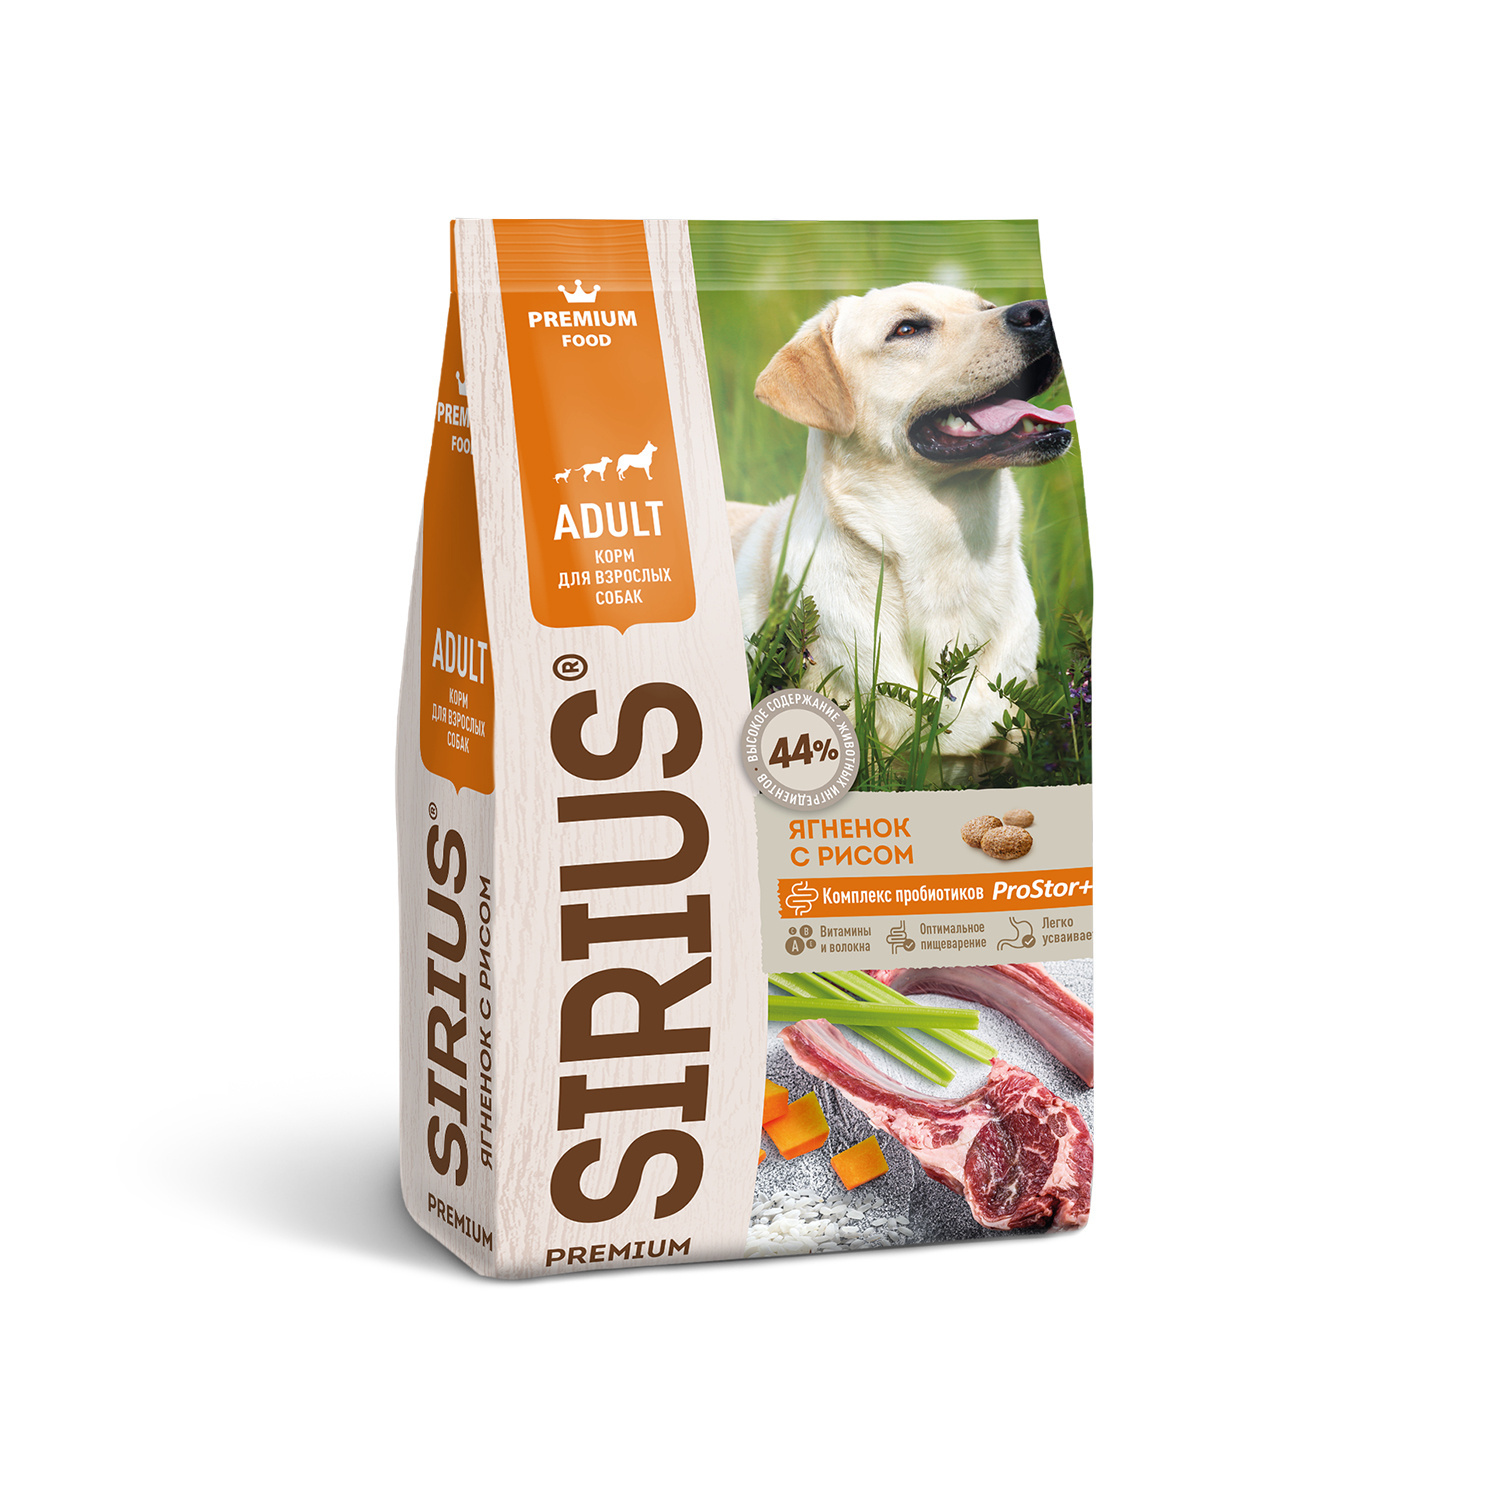 Sirius Sirius сухой корм для собак, ягненок и рис (2 кг) sirius sirius сухой корм для собак говядина с овощами 2 кг